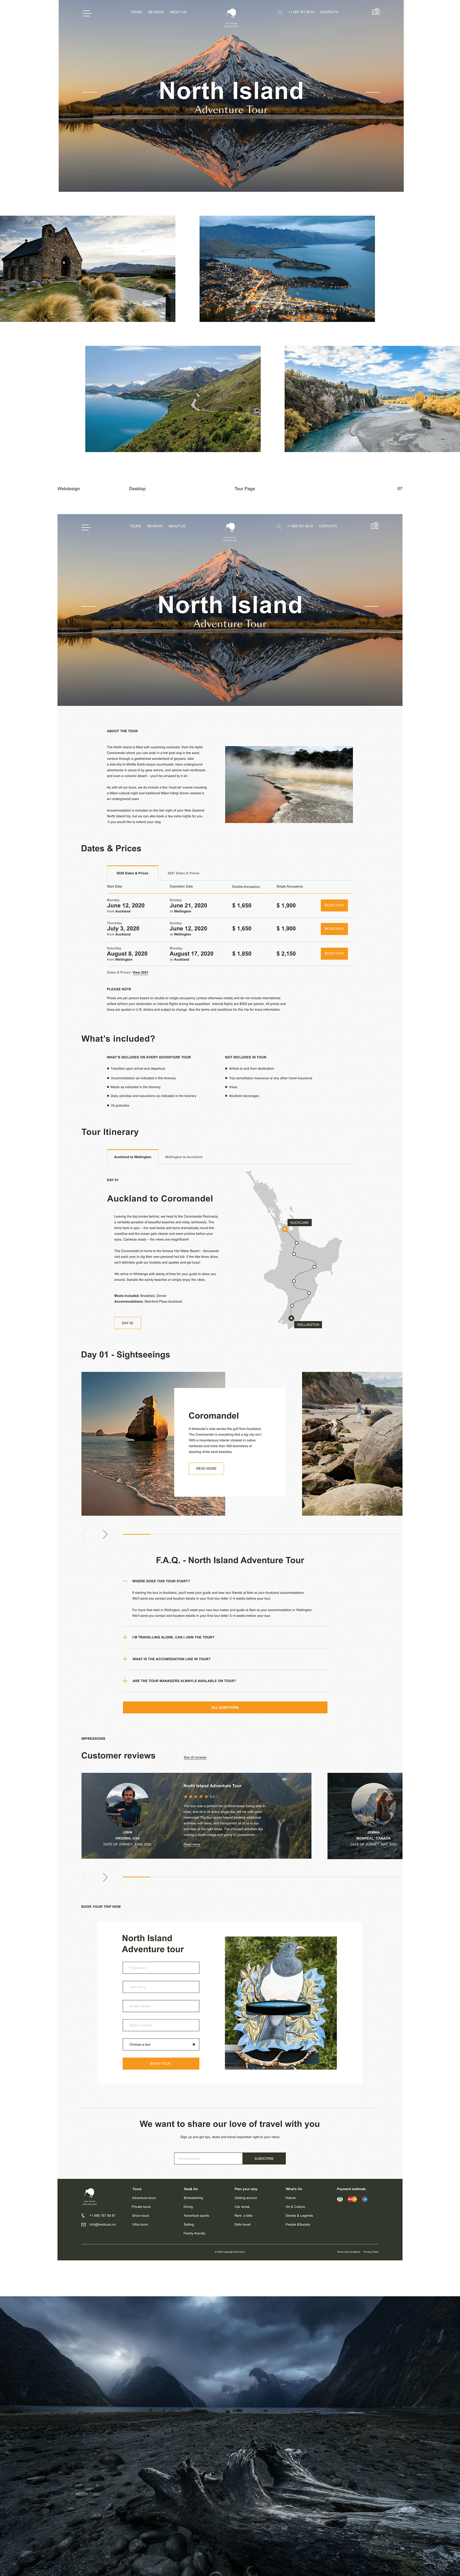 Interface tour Travel ux/ui Webdesign Website